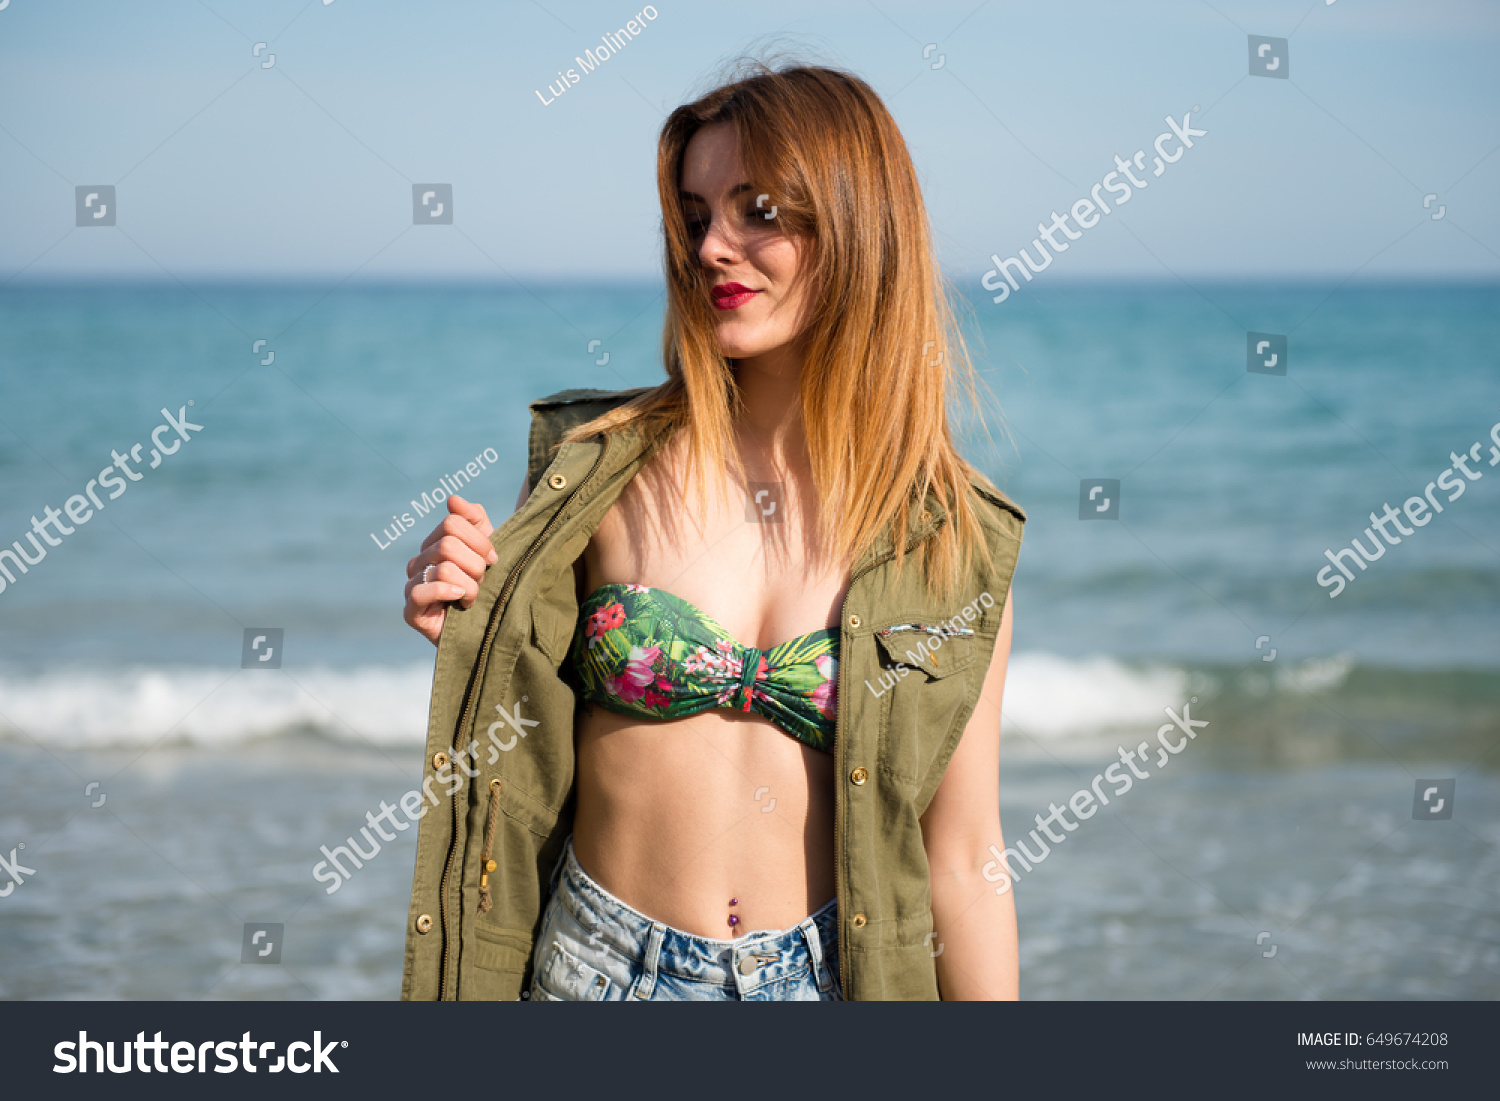 Beautiful Young Girls Nudist The Beach